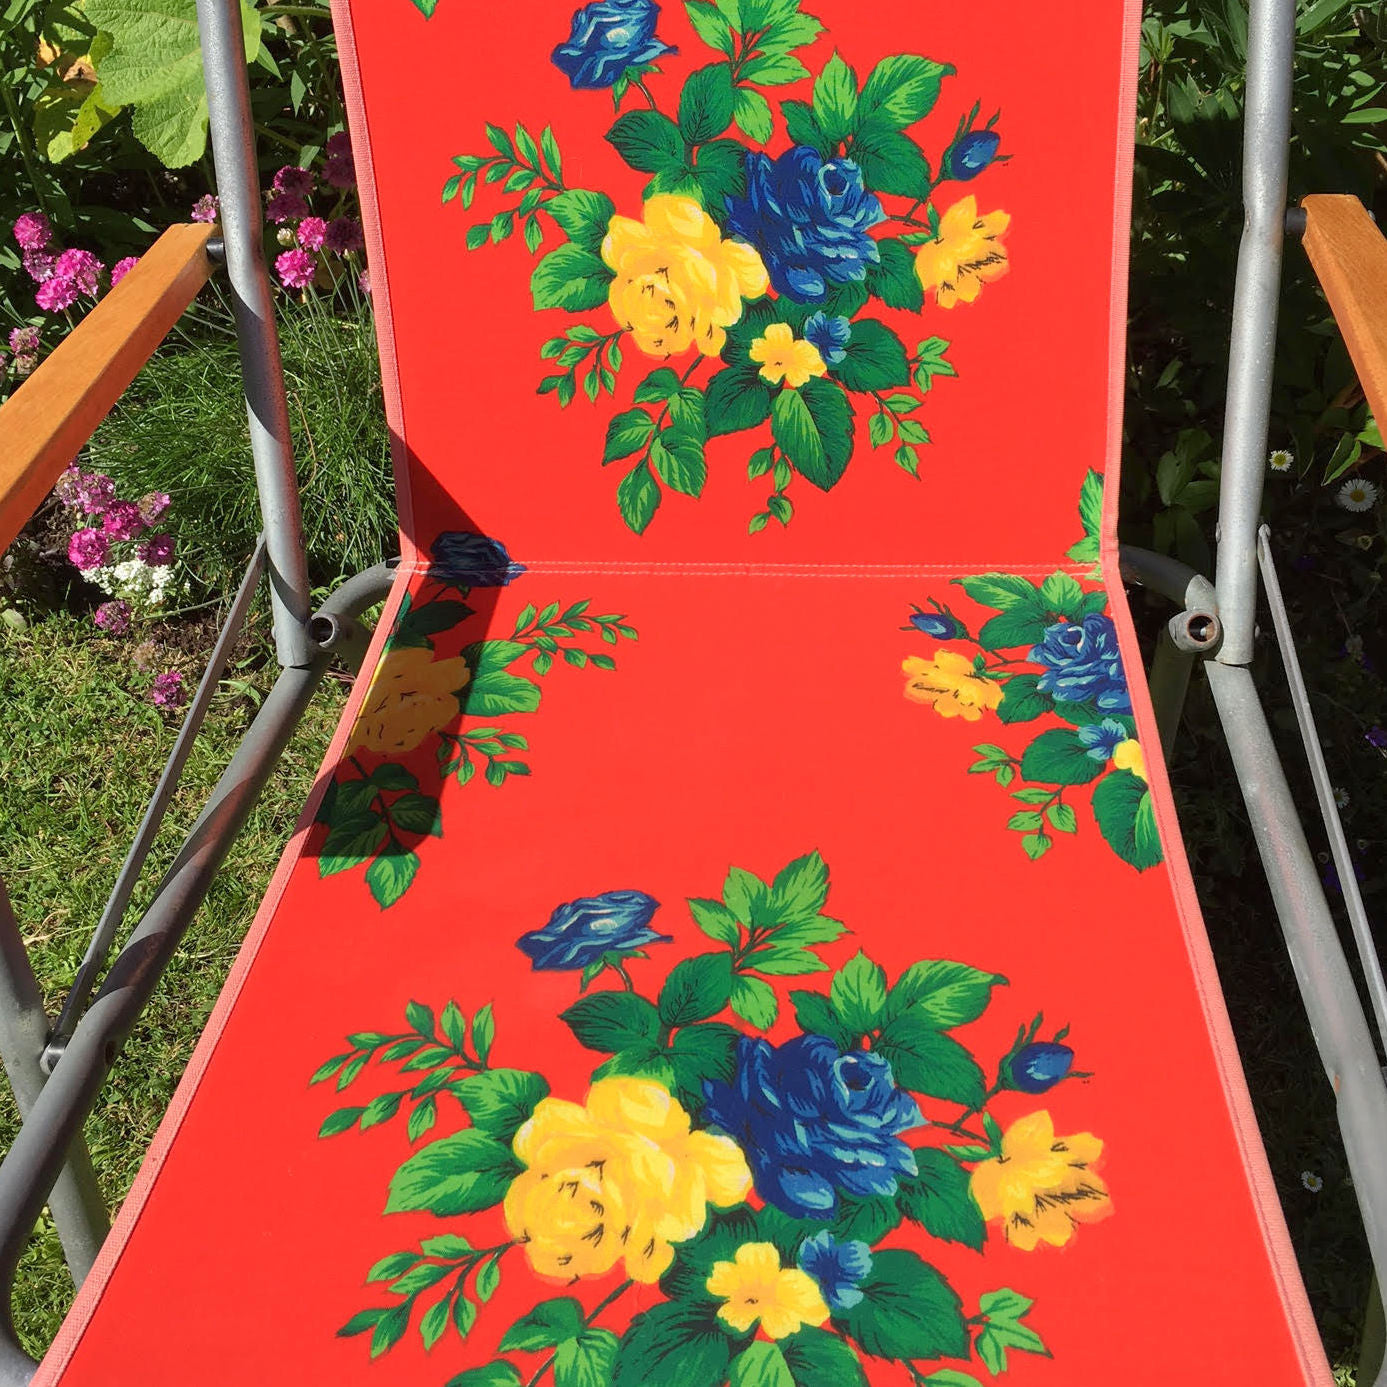 Vintage 1960s Folding Garden Chair - Flower Power - Red, Blue, Yellow & Green